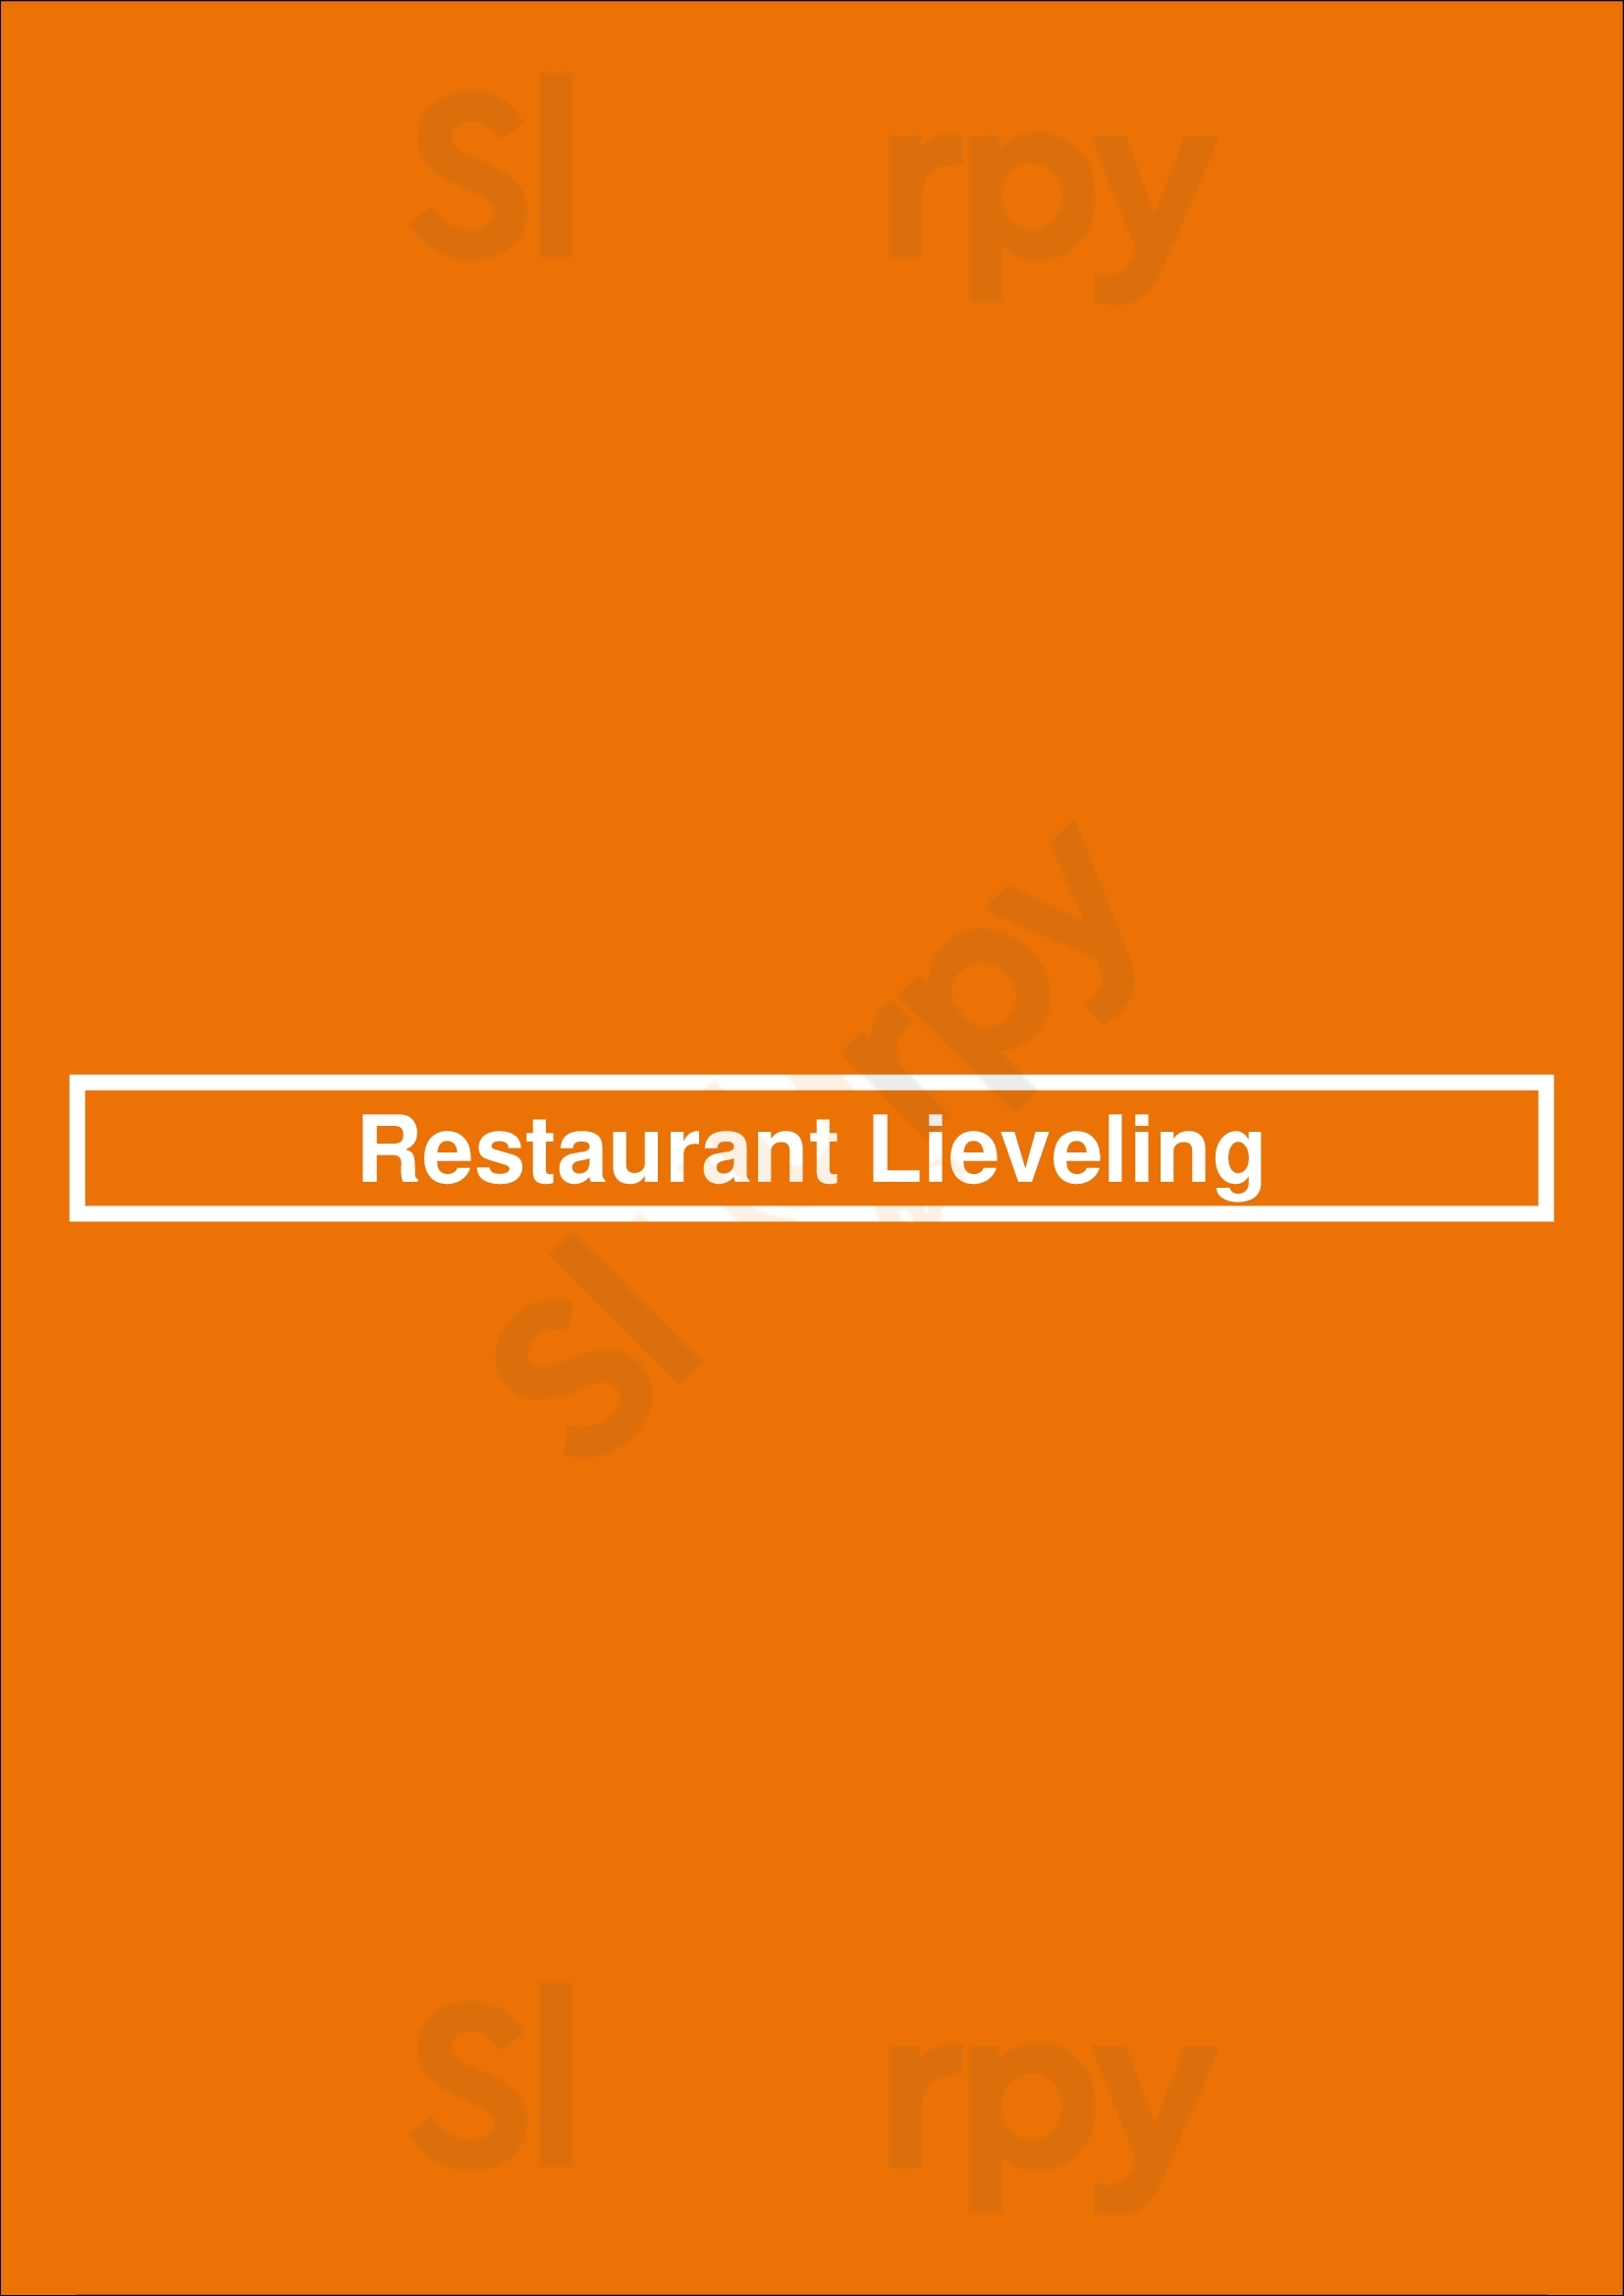 Restaurant Lieveling Hoofddorp Menu - 1